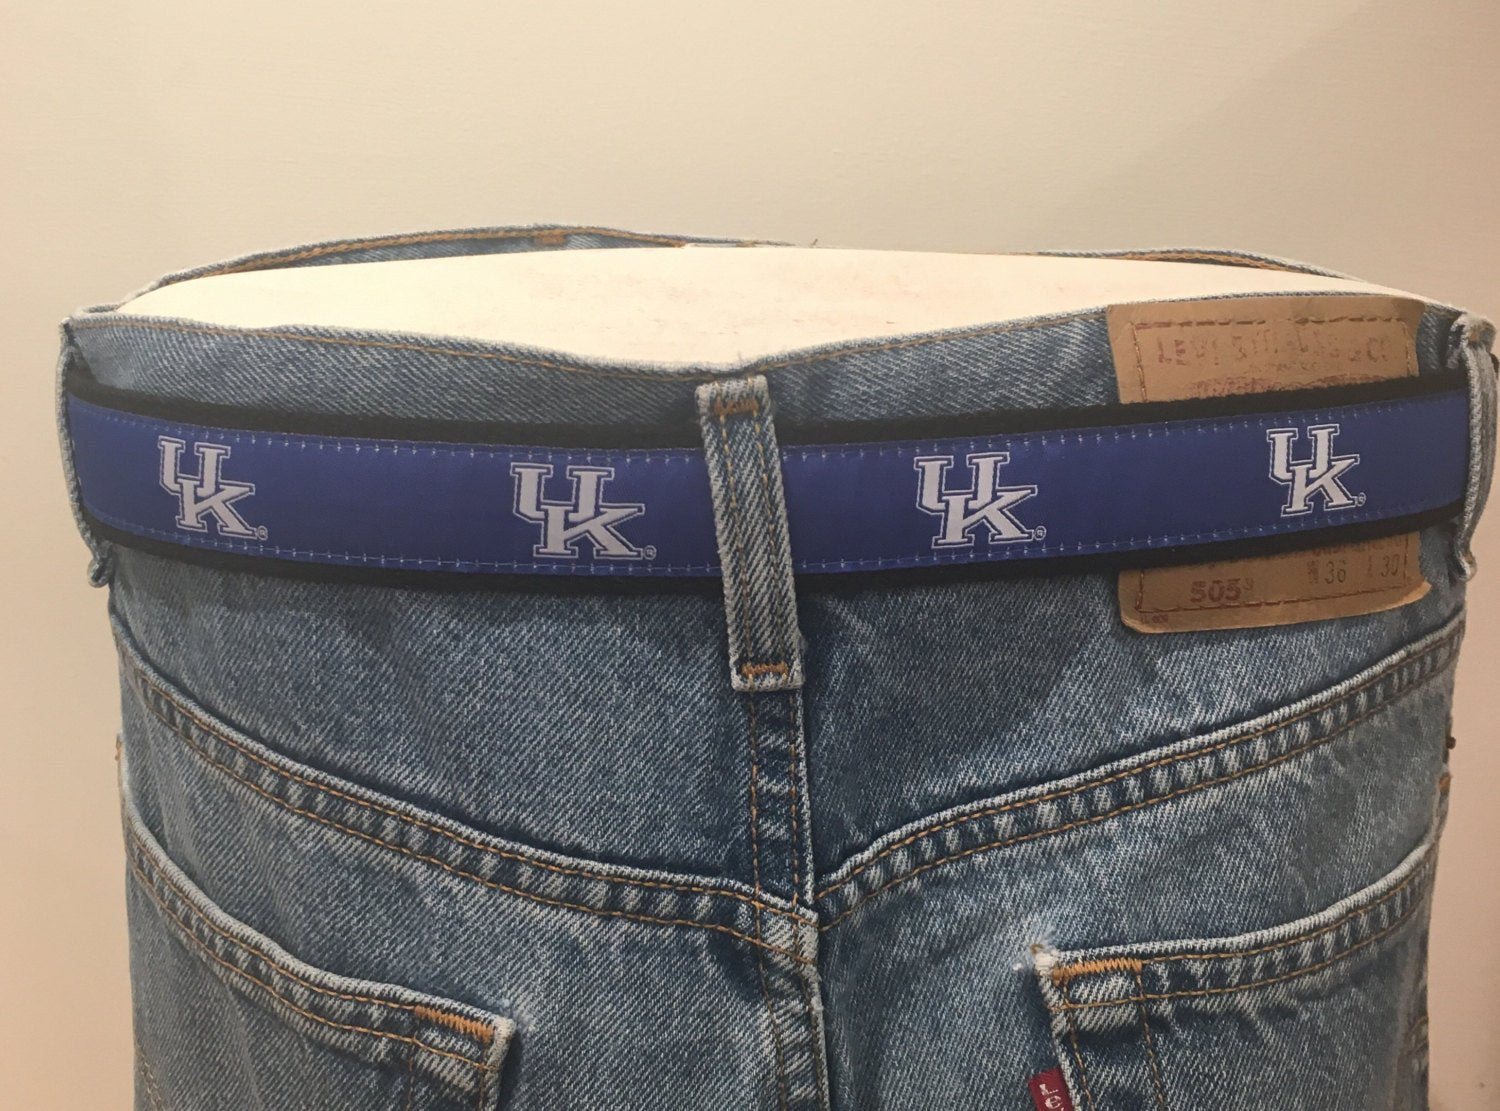 University of Kentucky Men's Web Leather Belt. Licensed UK products.